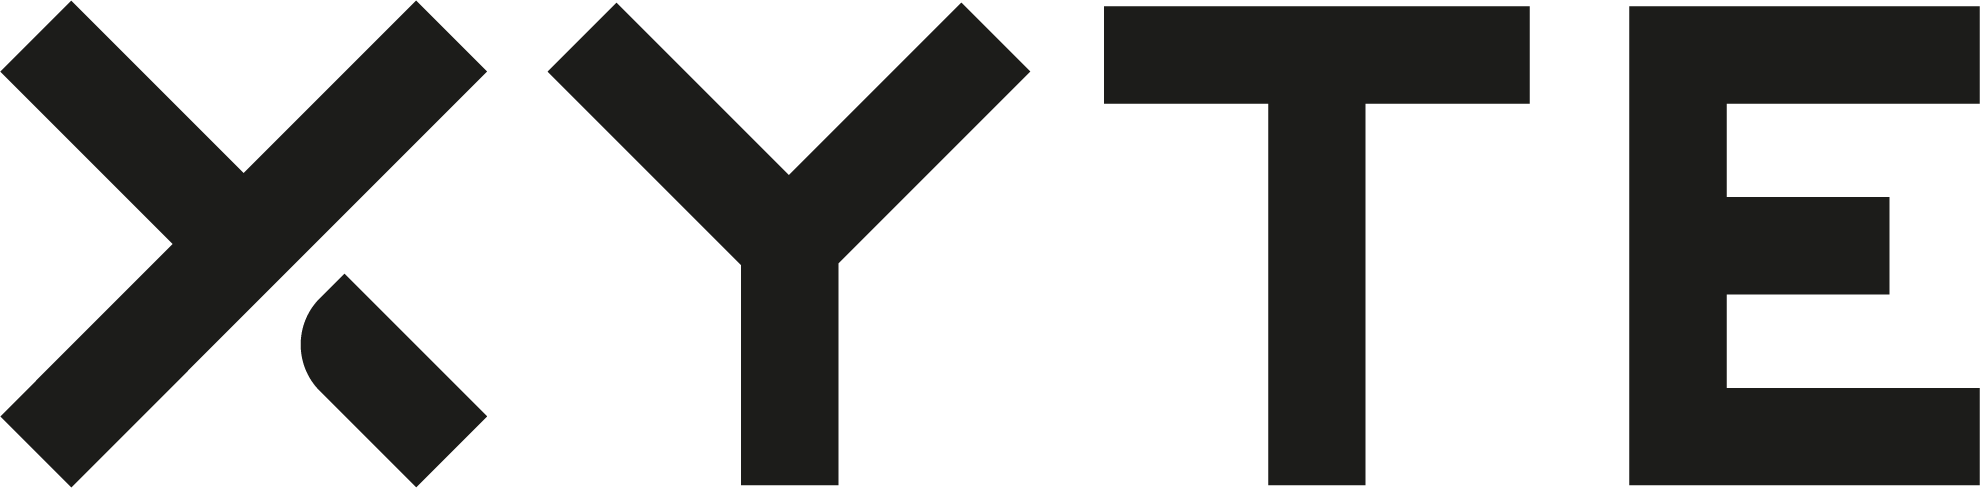 Xyte_logo-1